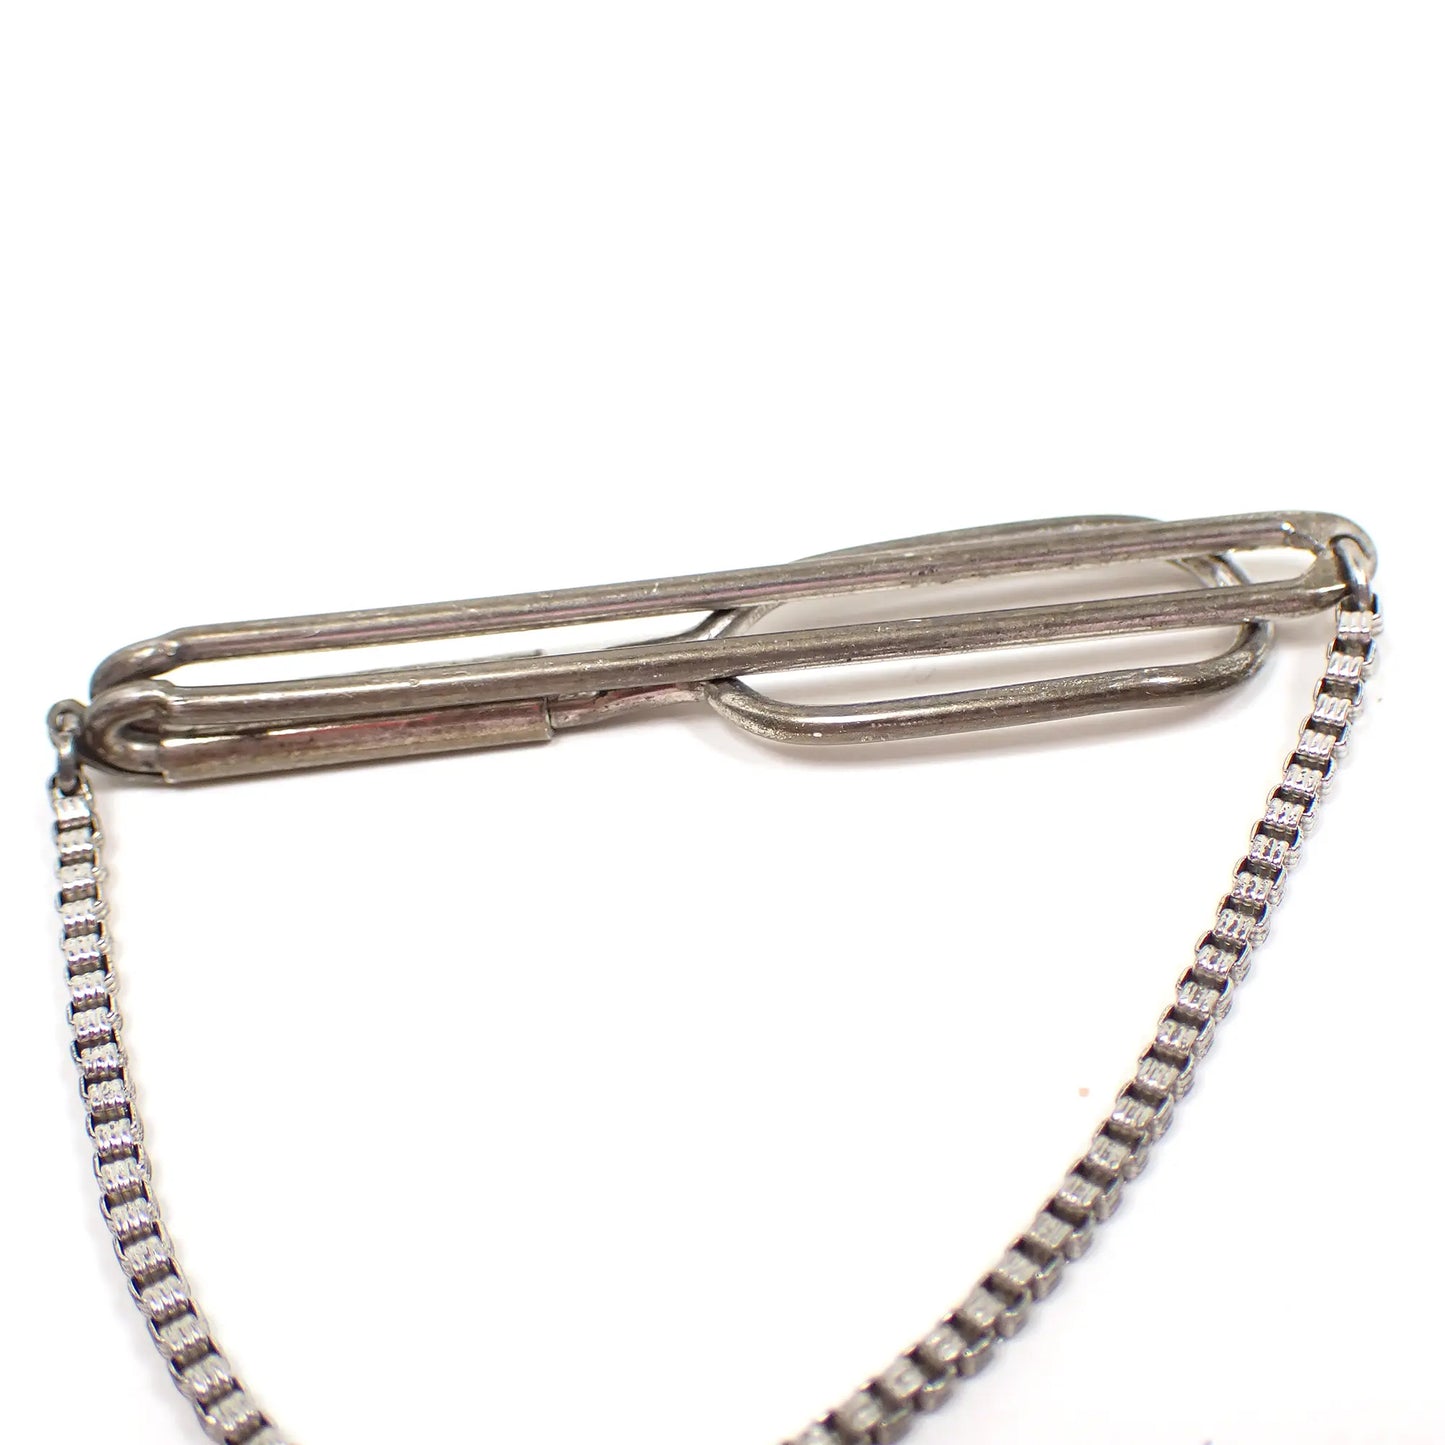 Swank Art Deco Sterling Silver Vintage Tie Chain Bar